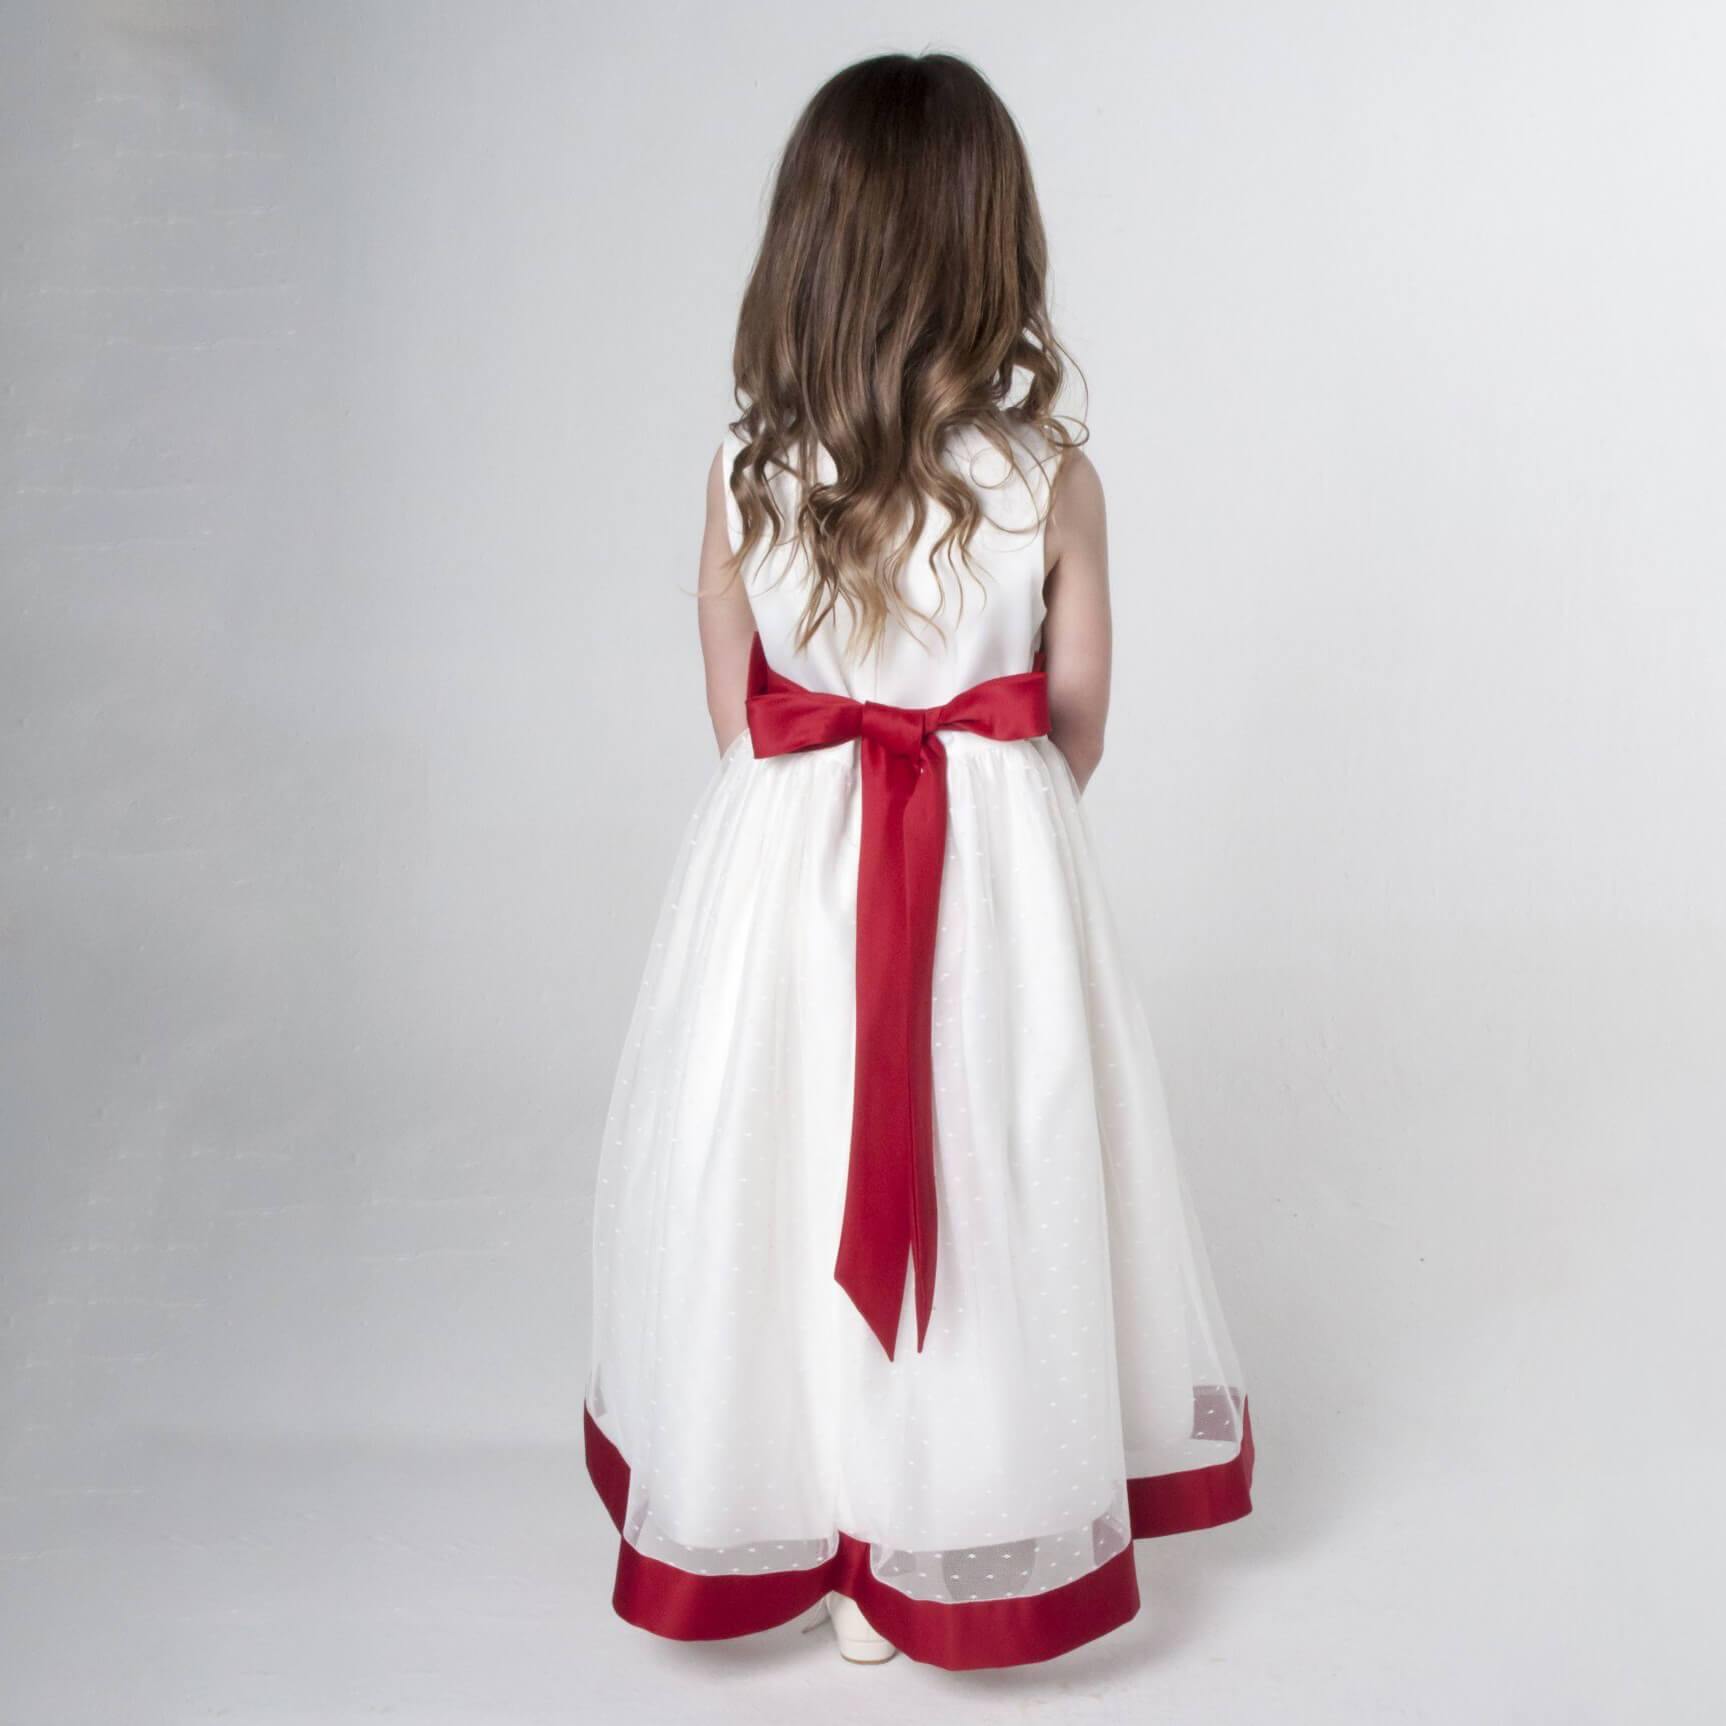 Girl in white and red flower girl dress